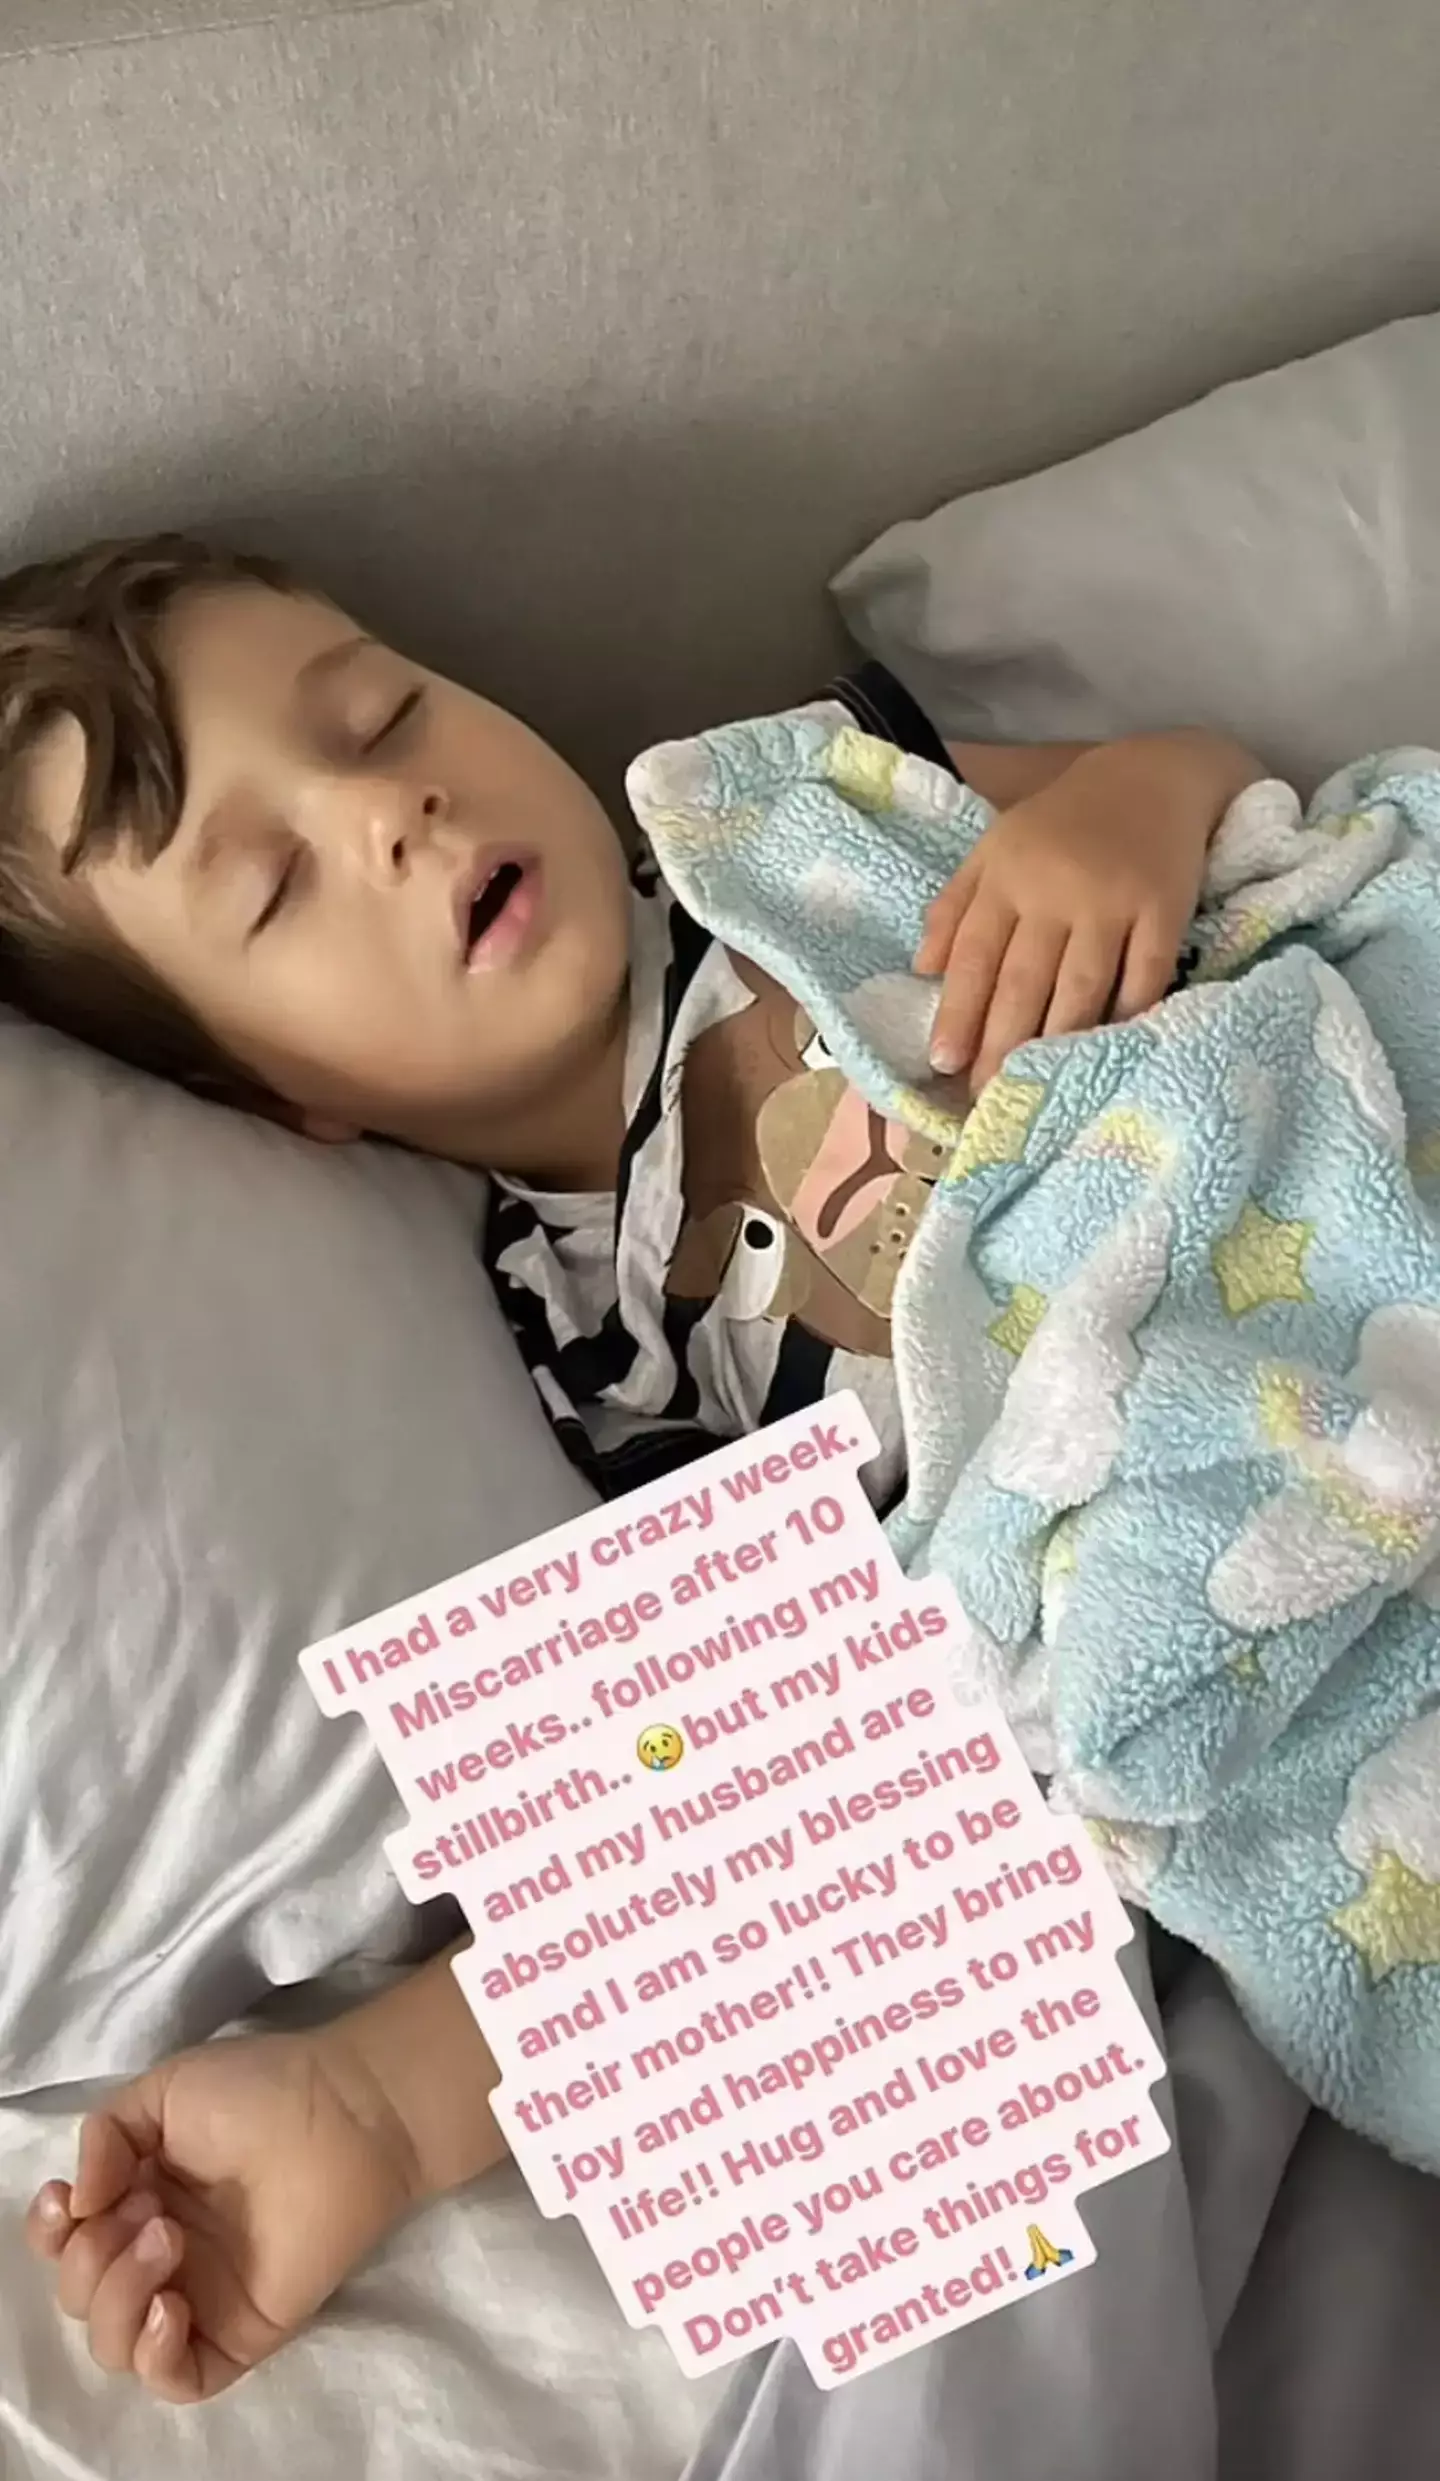 Maya shared the sad news on her Instagram Story.